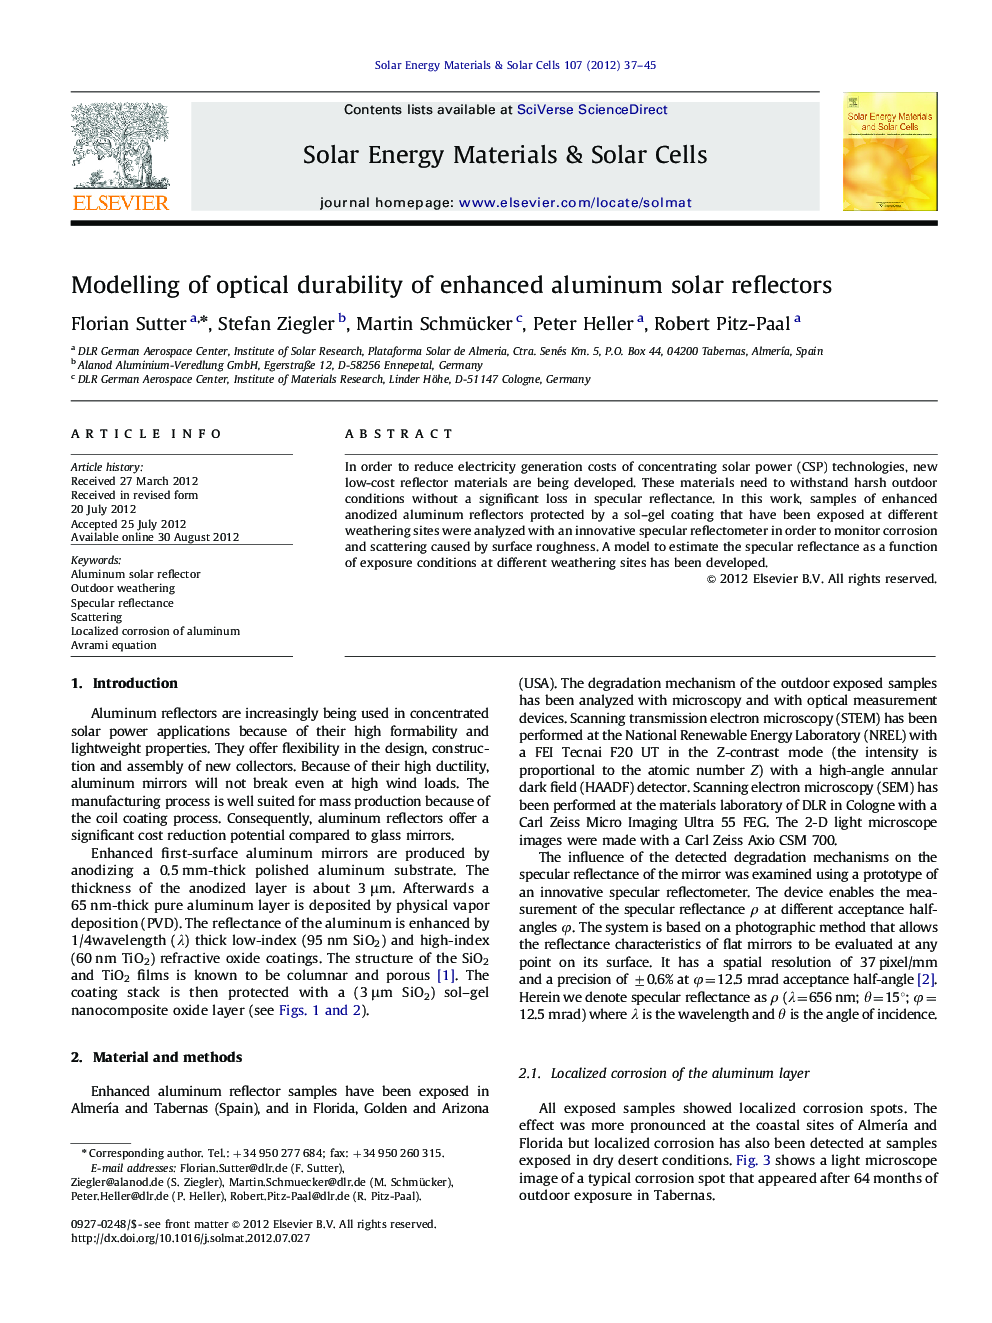 Modelling of optical durability of enhanced aluminum solar reflectors